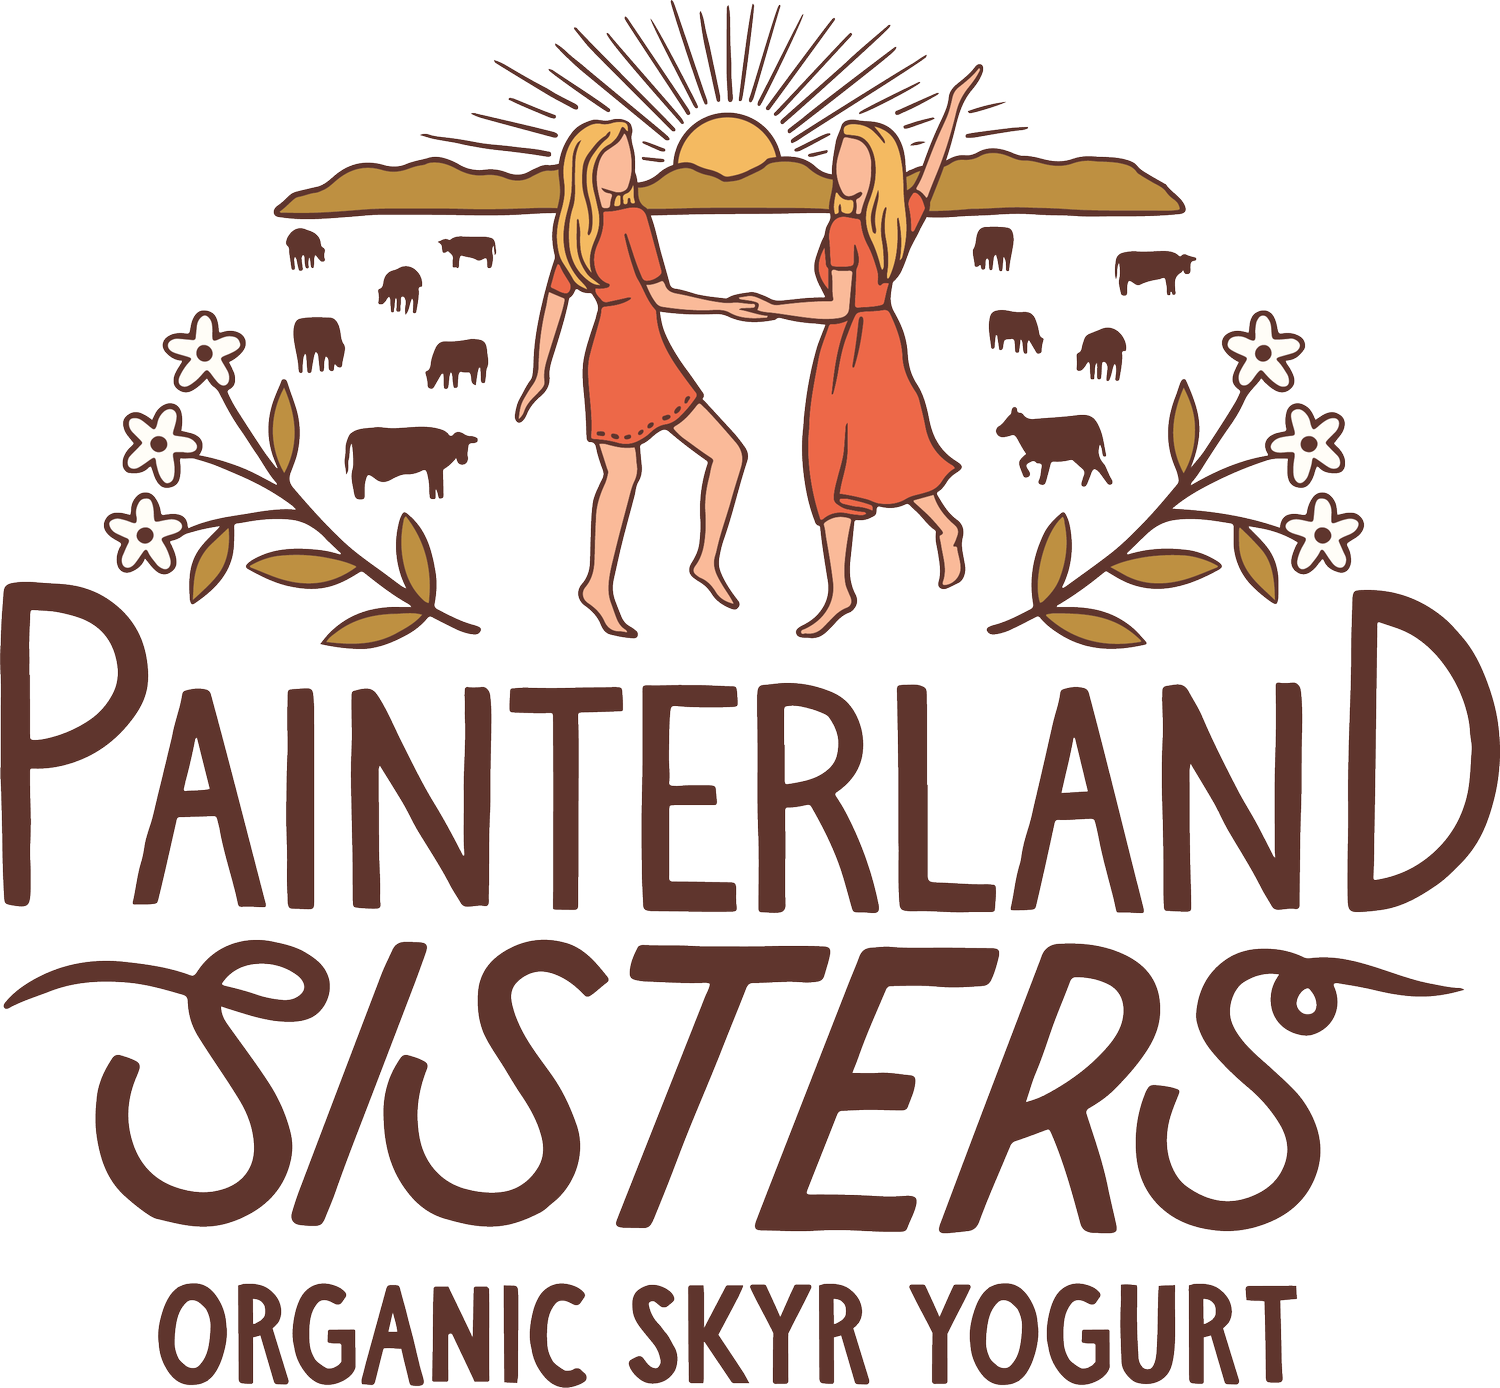 Painterland Sisters logo